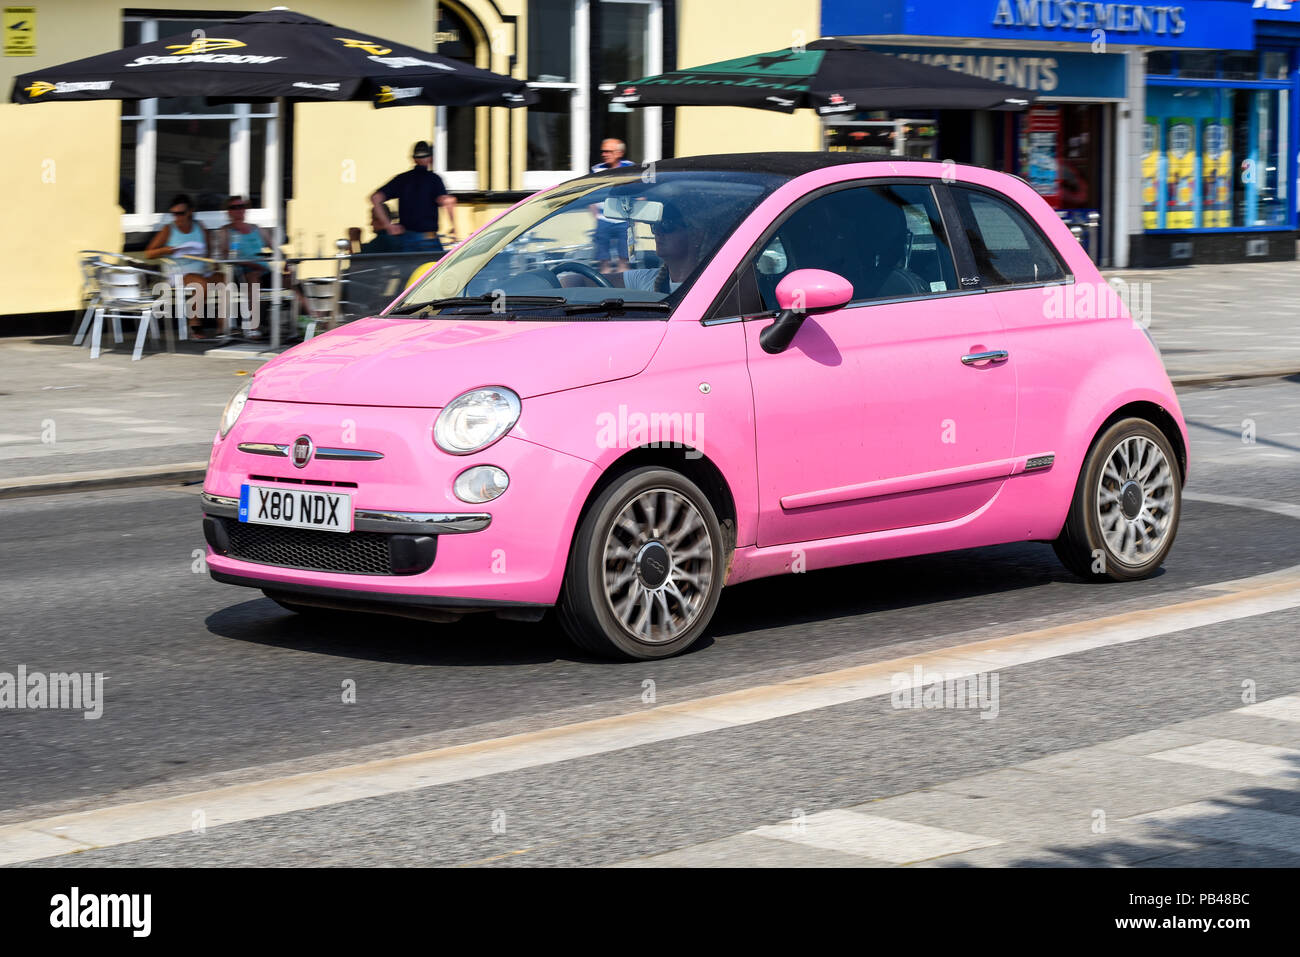 Pink Fiat 500 Car Immagini e Fotos Stock - Alamy